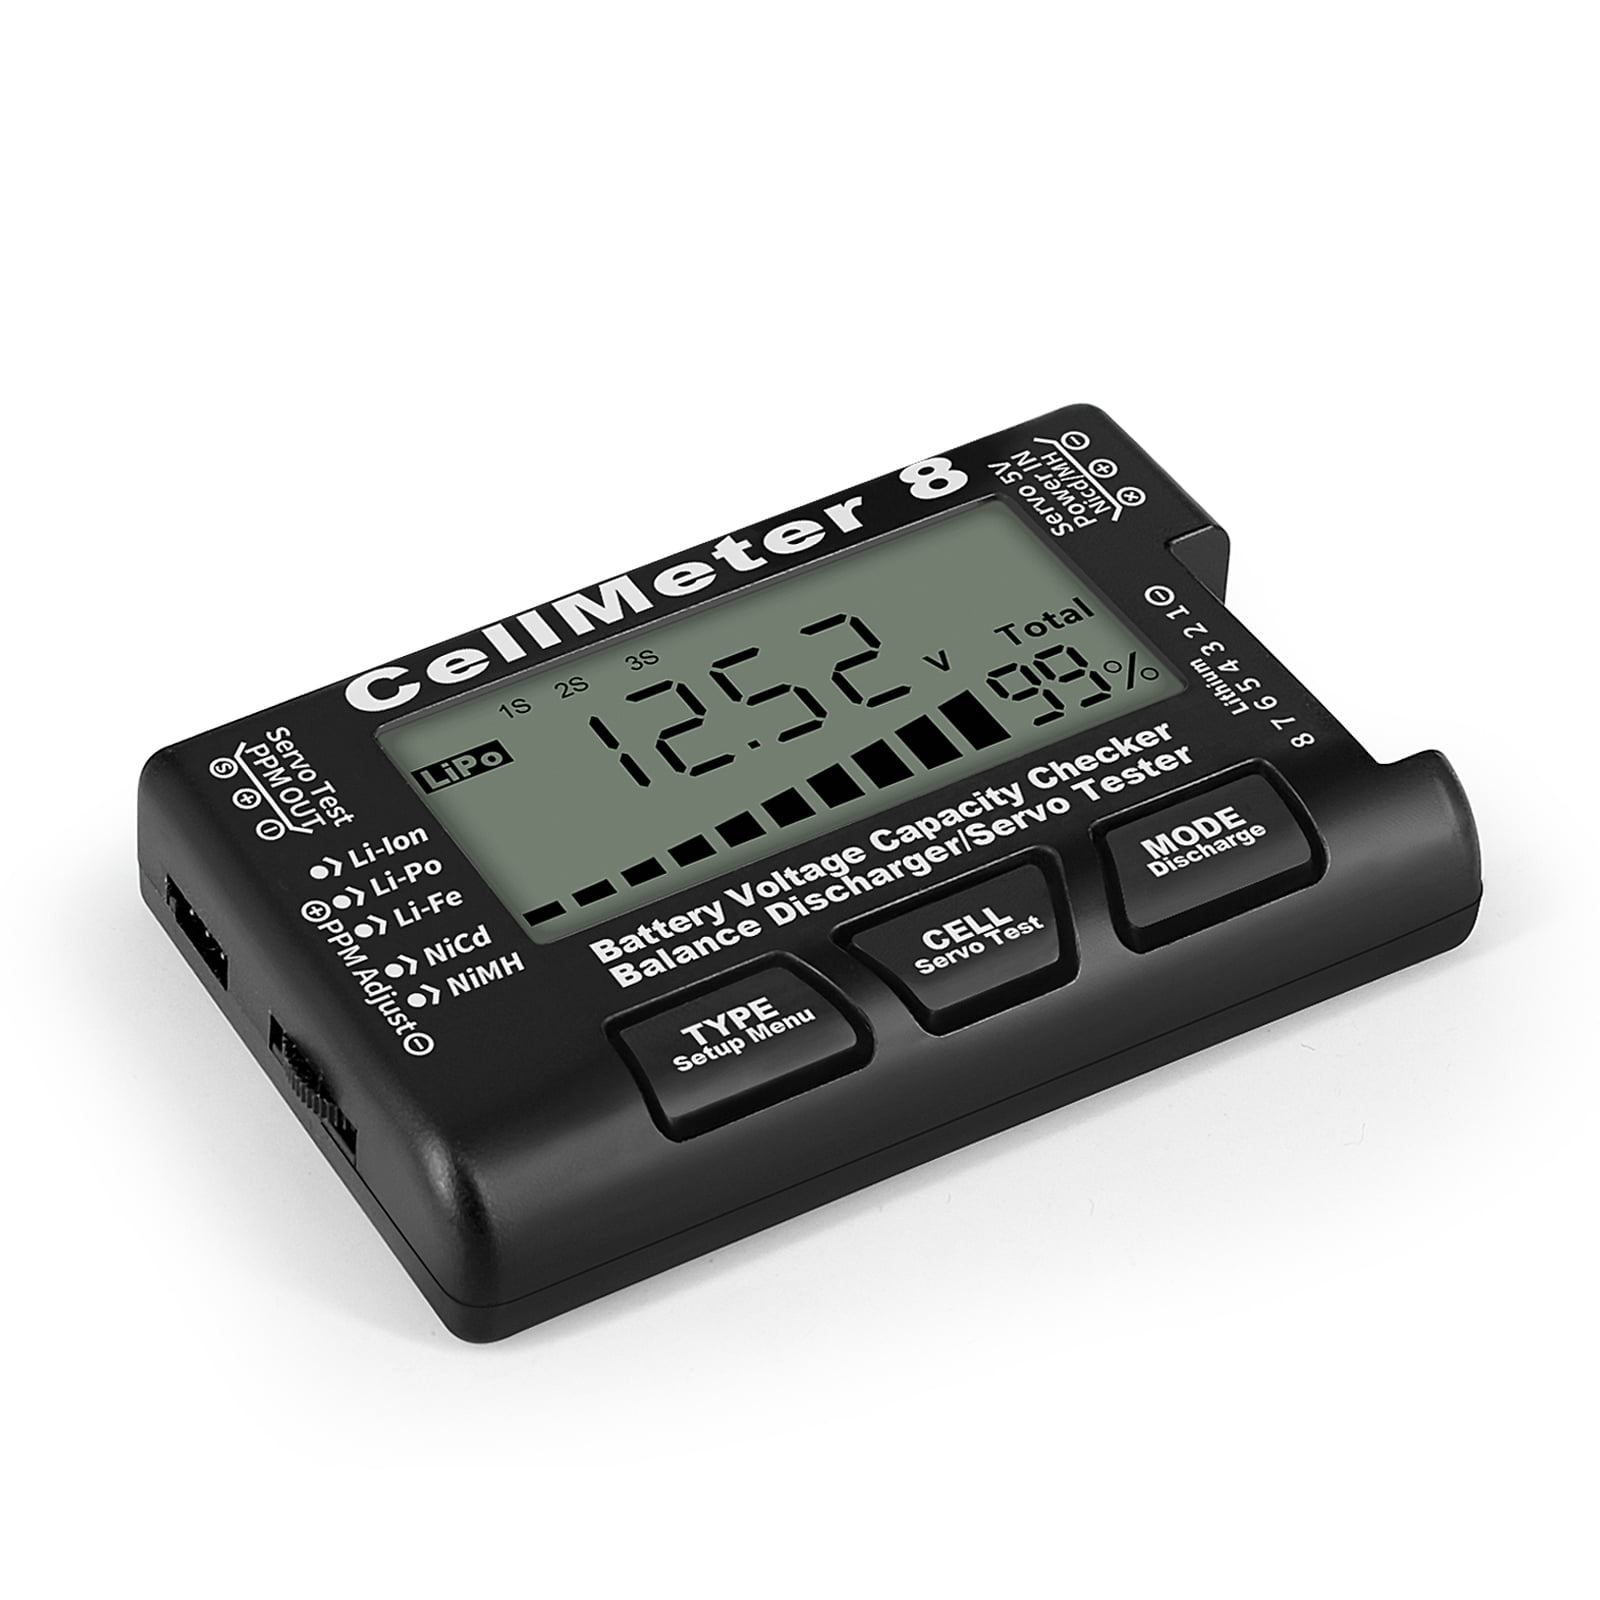 RUNCCI-YUN Digital Battery Capacity Tester Indicator Checker for LiPo Life  Li-ion Nicd NiMH on OnBuy